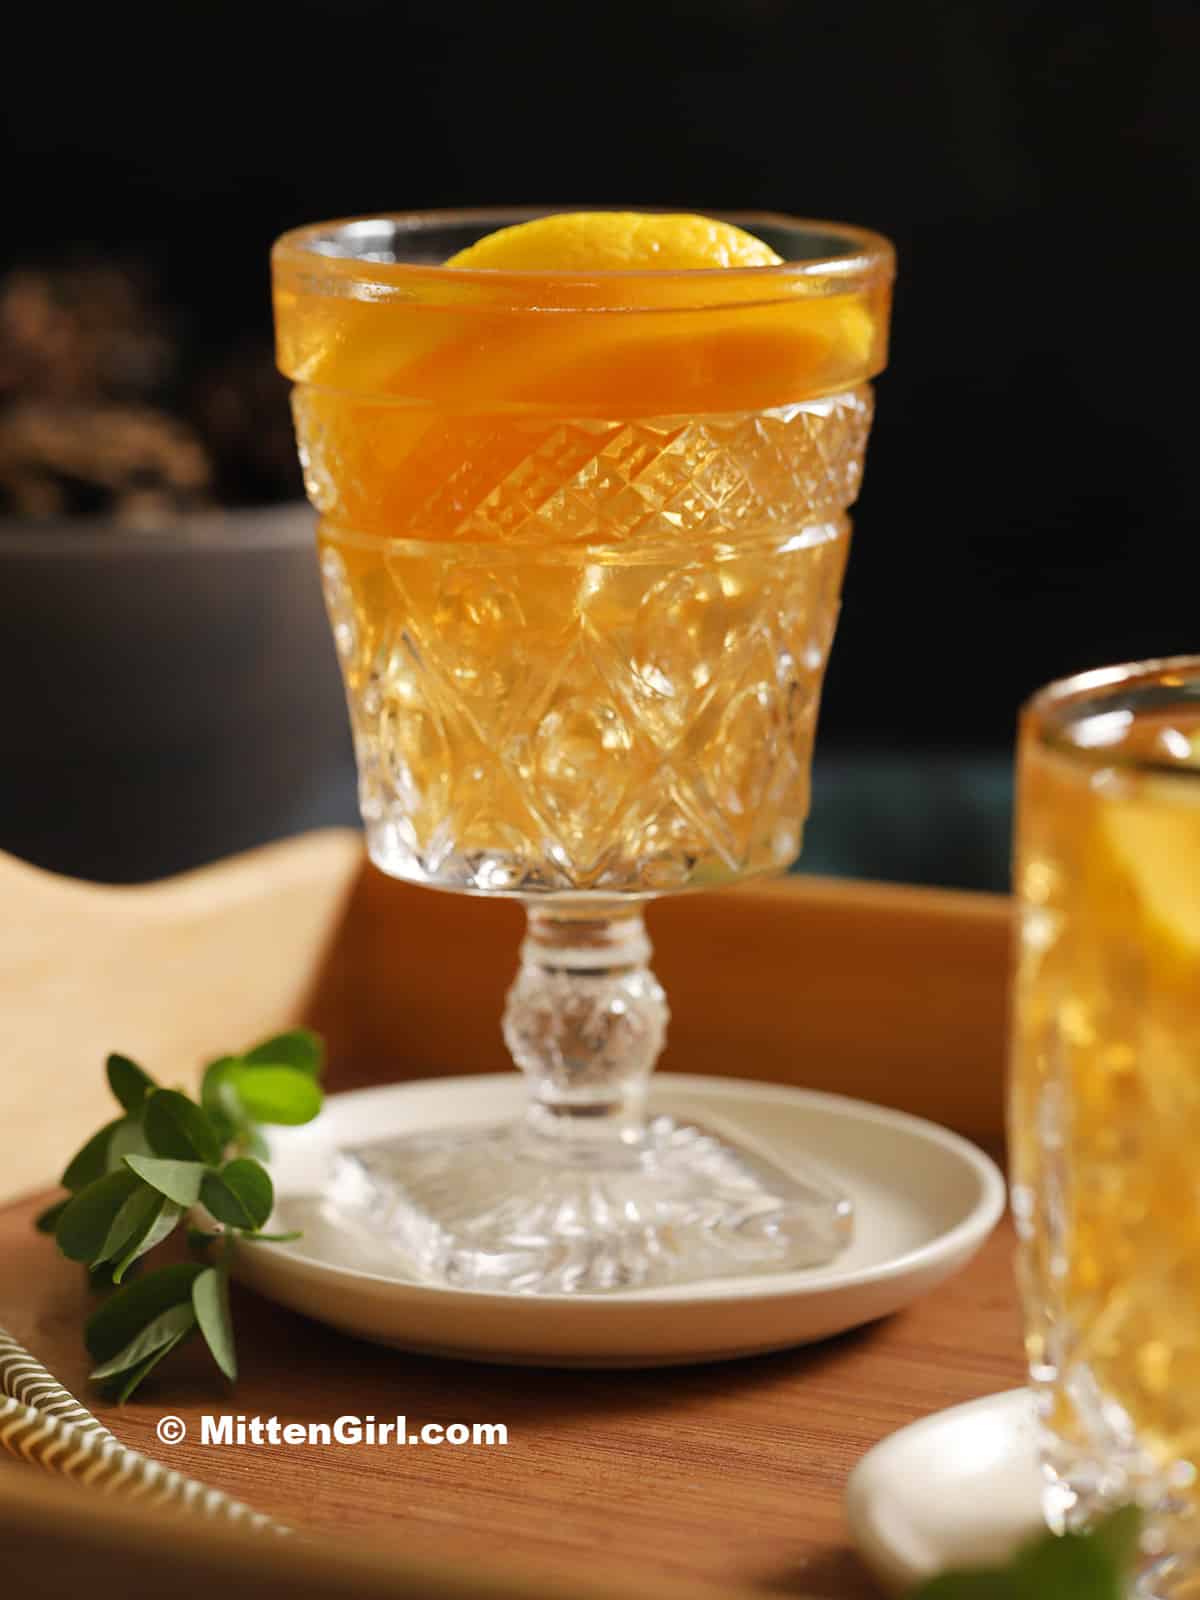 A glass of ginger peach iced tea.